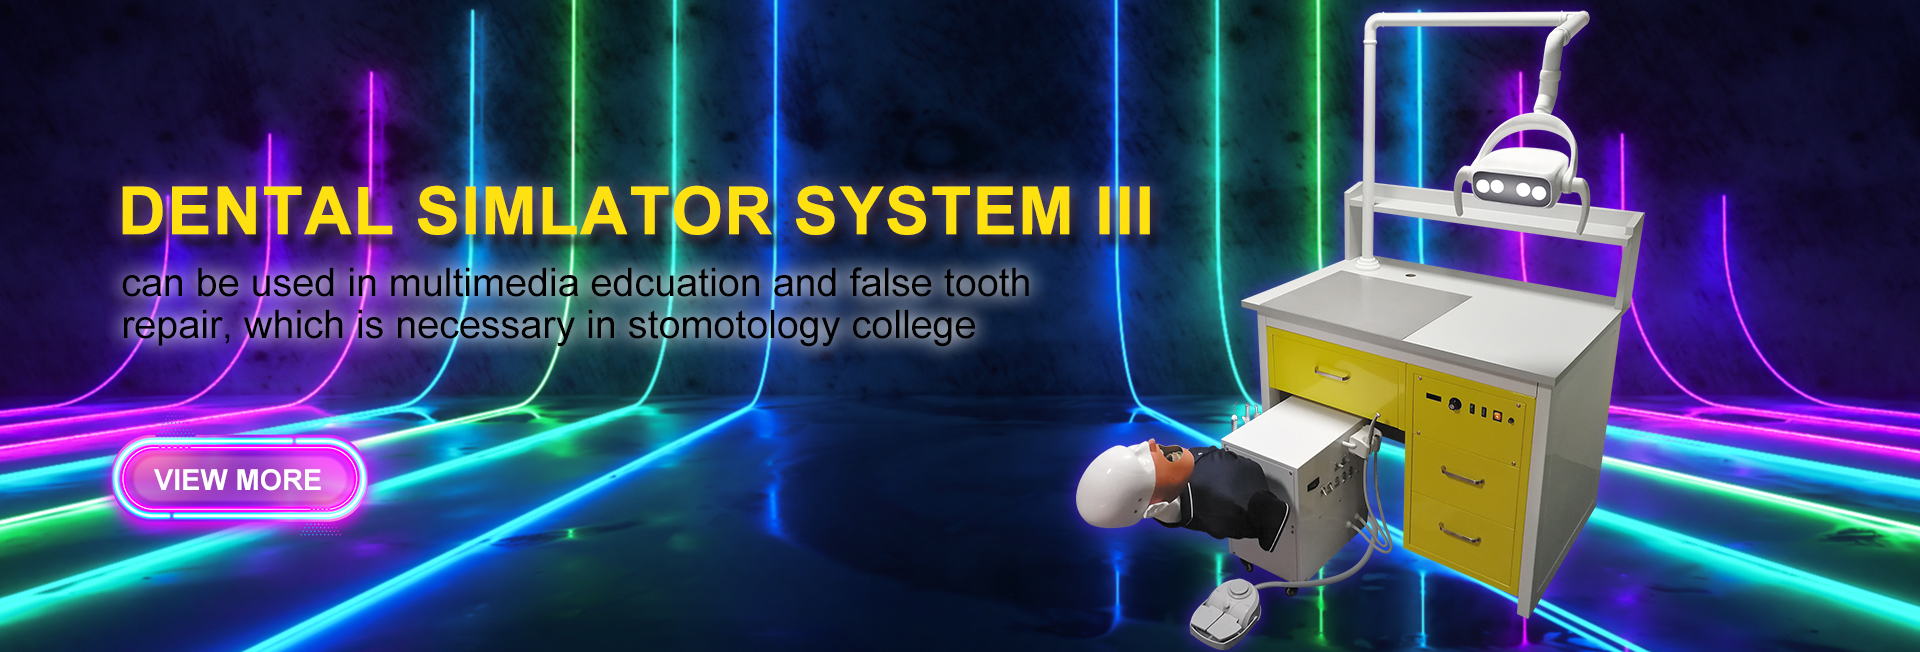 Dental simulator version iii electric simulation system